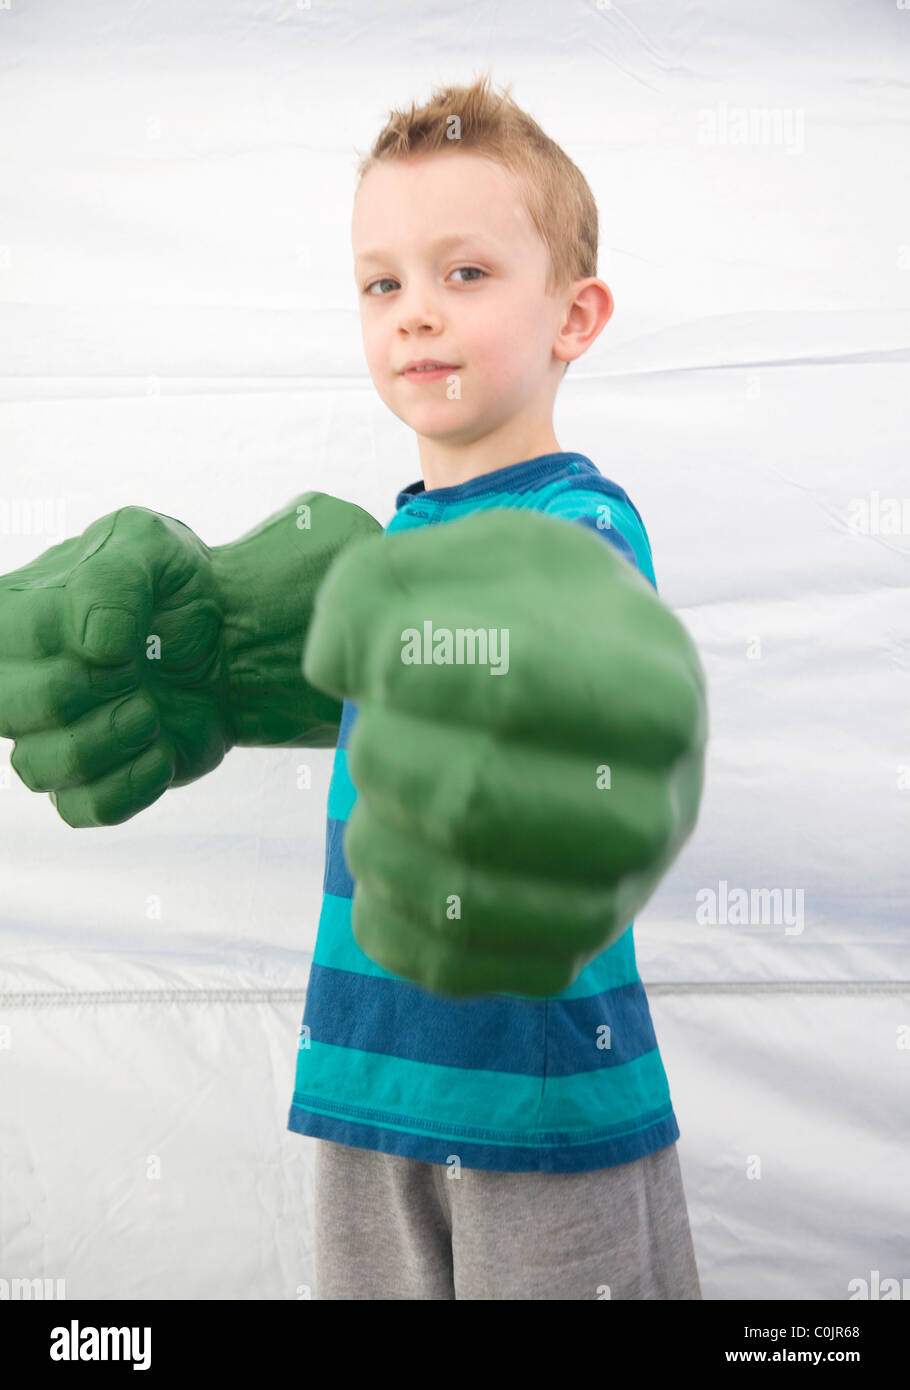 boy-with-hulk-hands-C0JR68.jpg